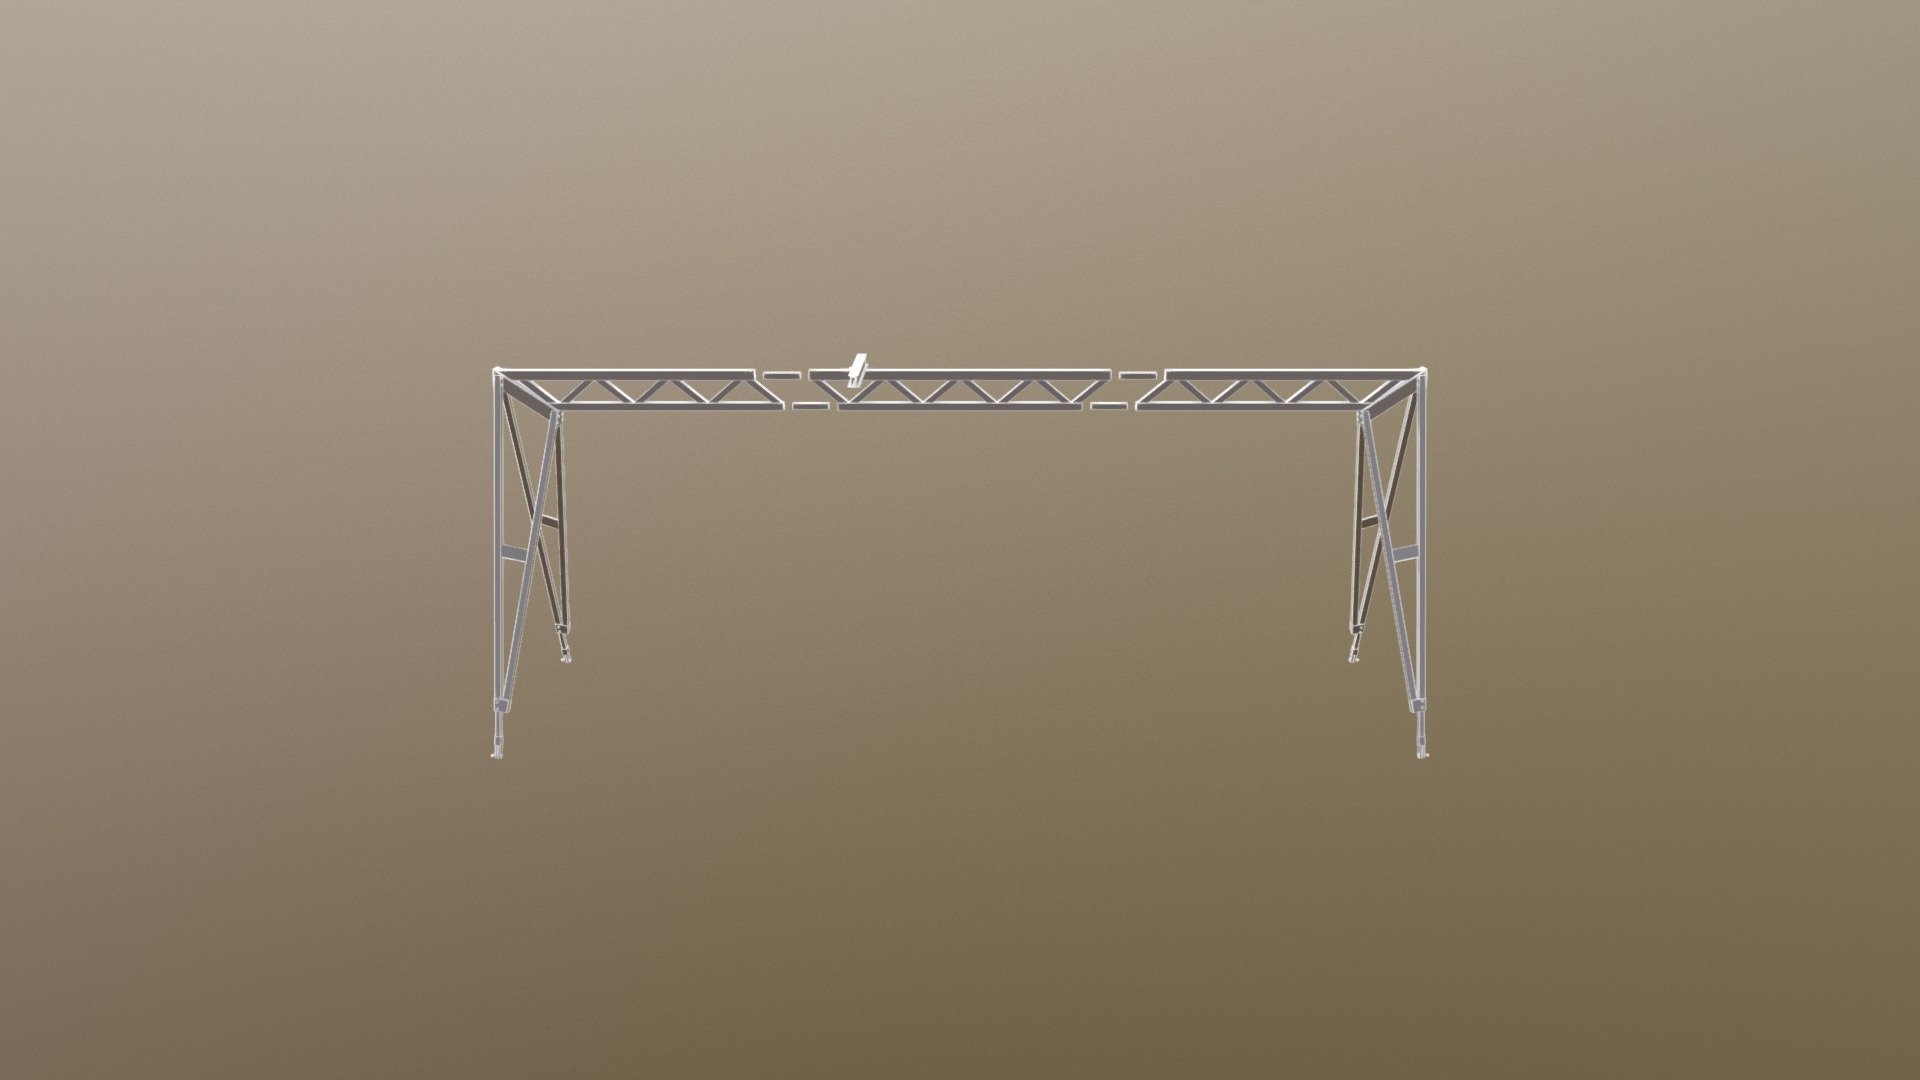 split-truss blender - 3D model by brooklynsolarworks 3d model